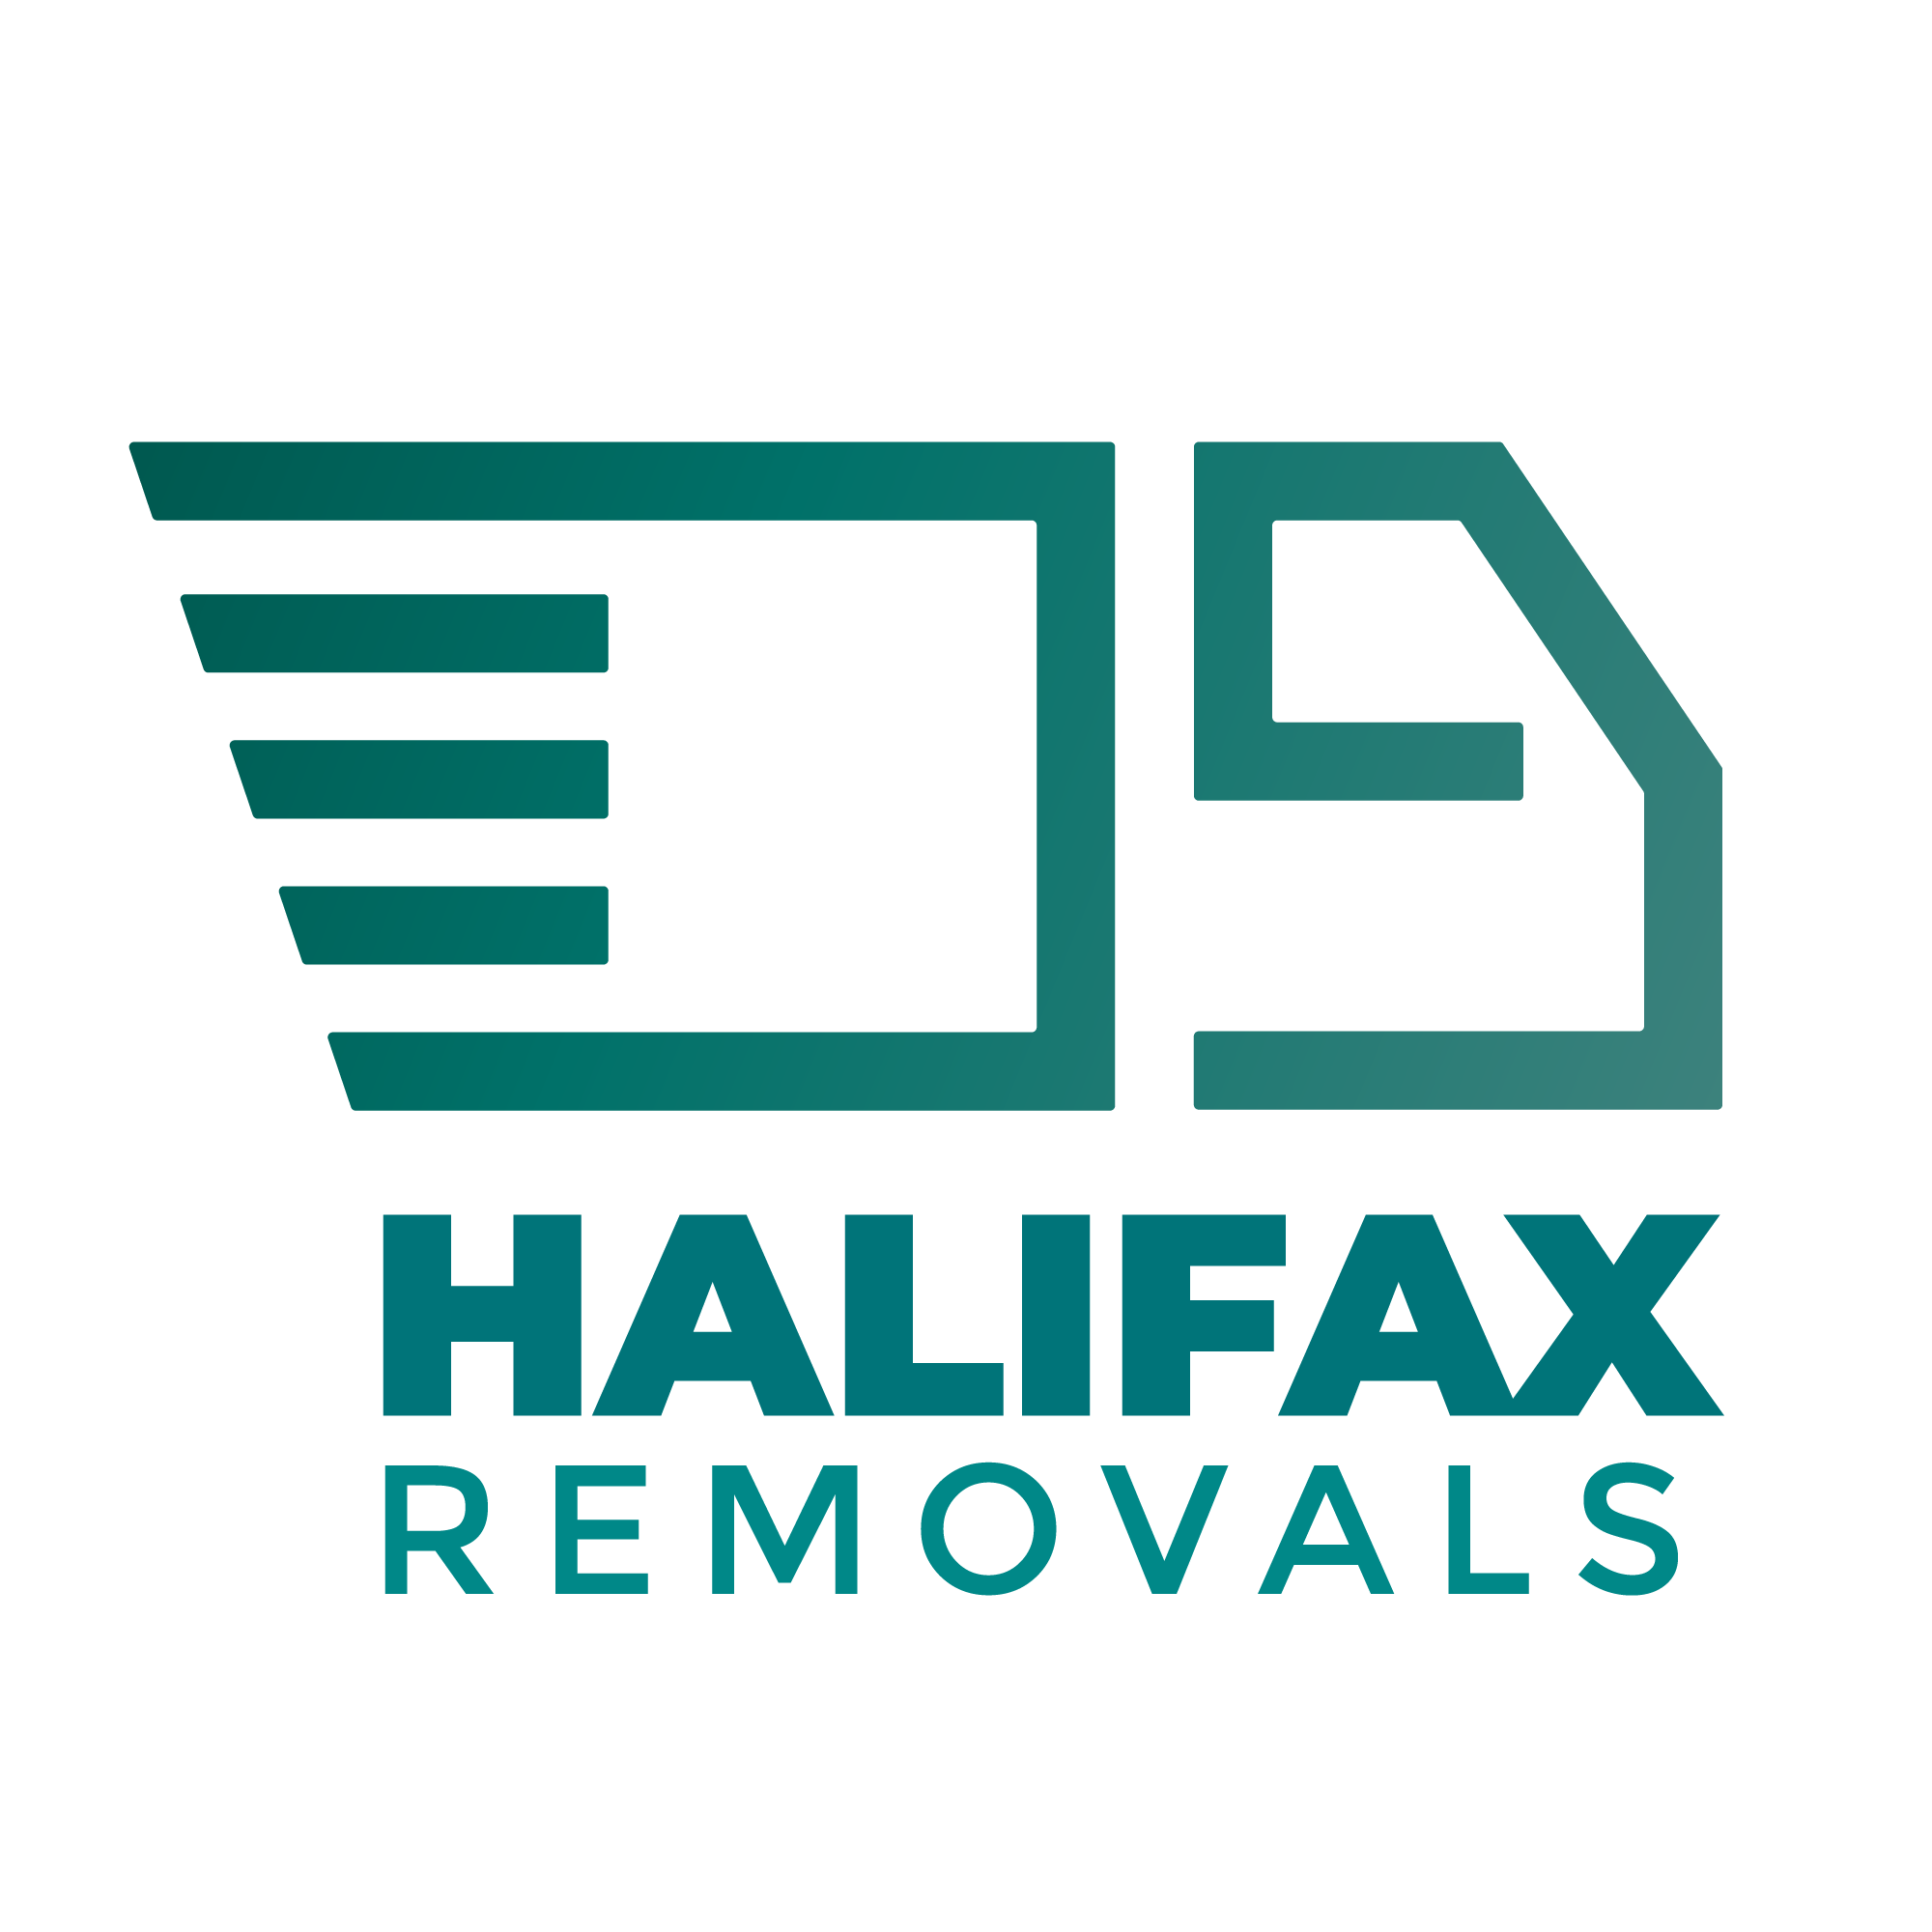 Halifax Removals logo